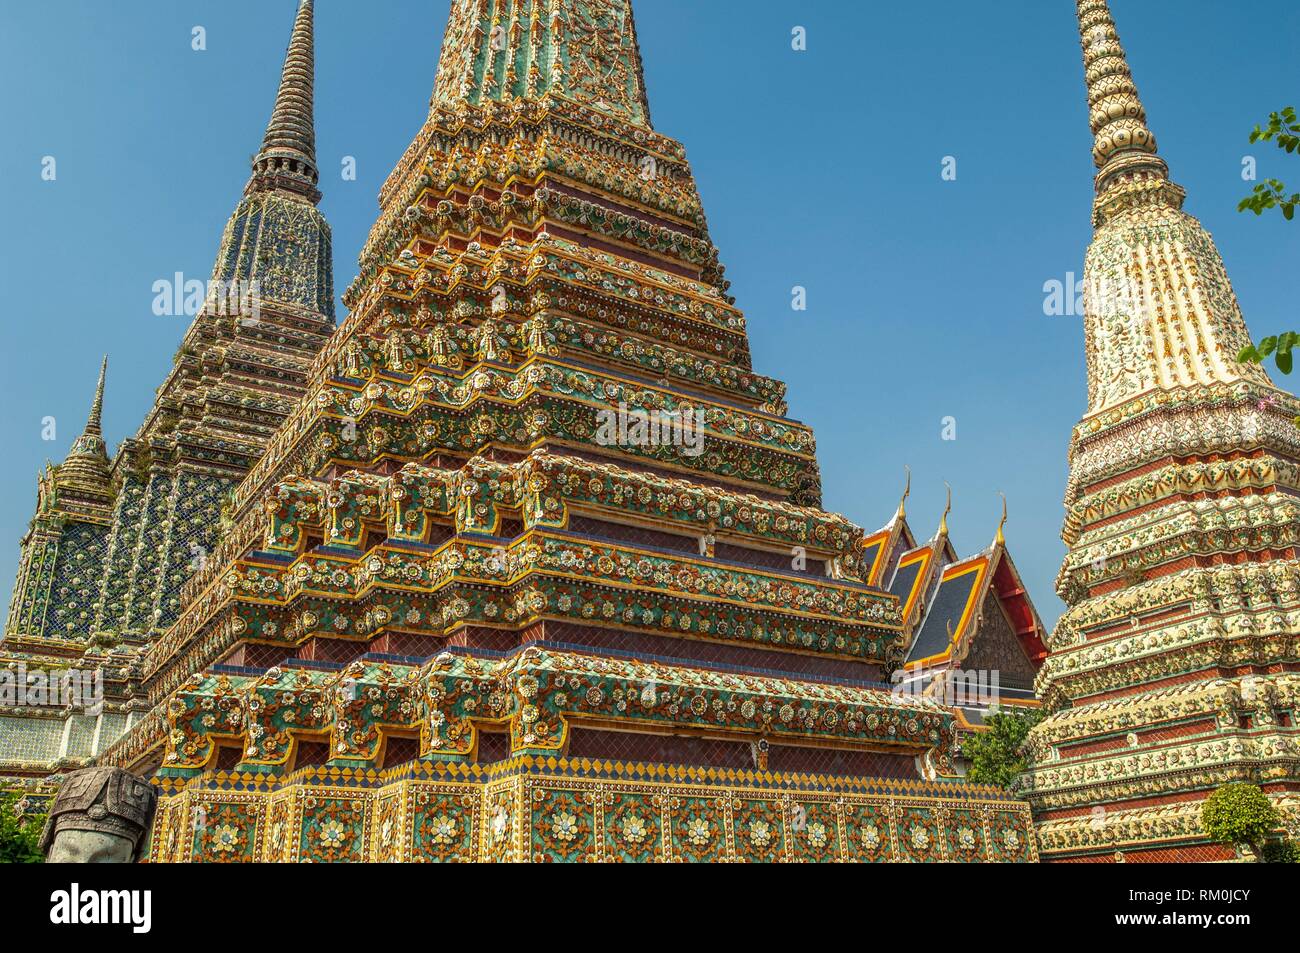 Wat Pho - Temple of the Reclining Buddha, its official name is Wat Phra Chetuphon Vimolmangklararm Rajwaramahaviharn, Phra Nakhon district, Bangkok, Stock Photo